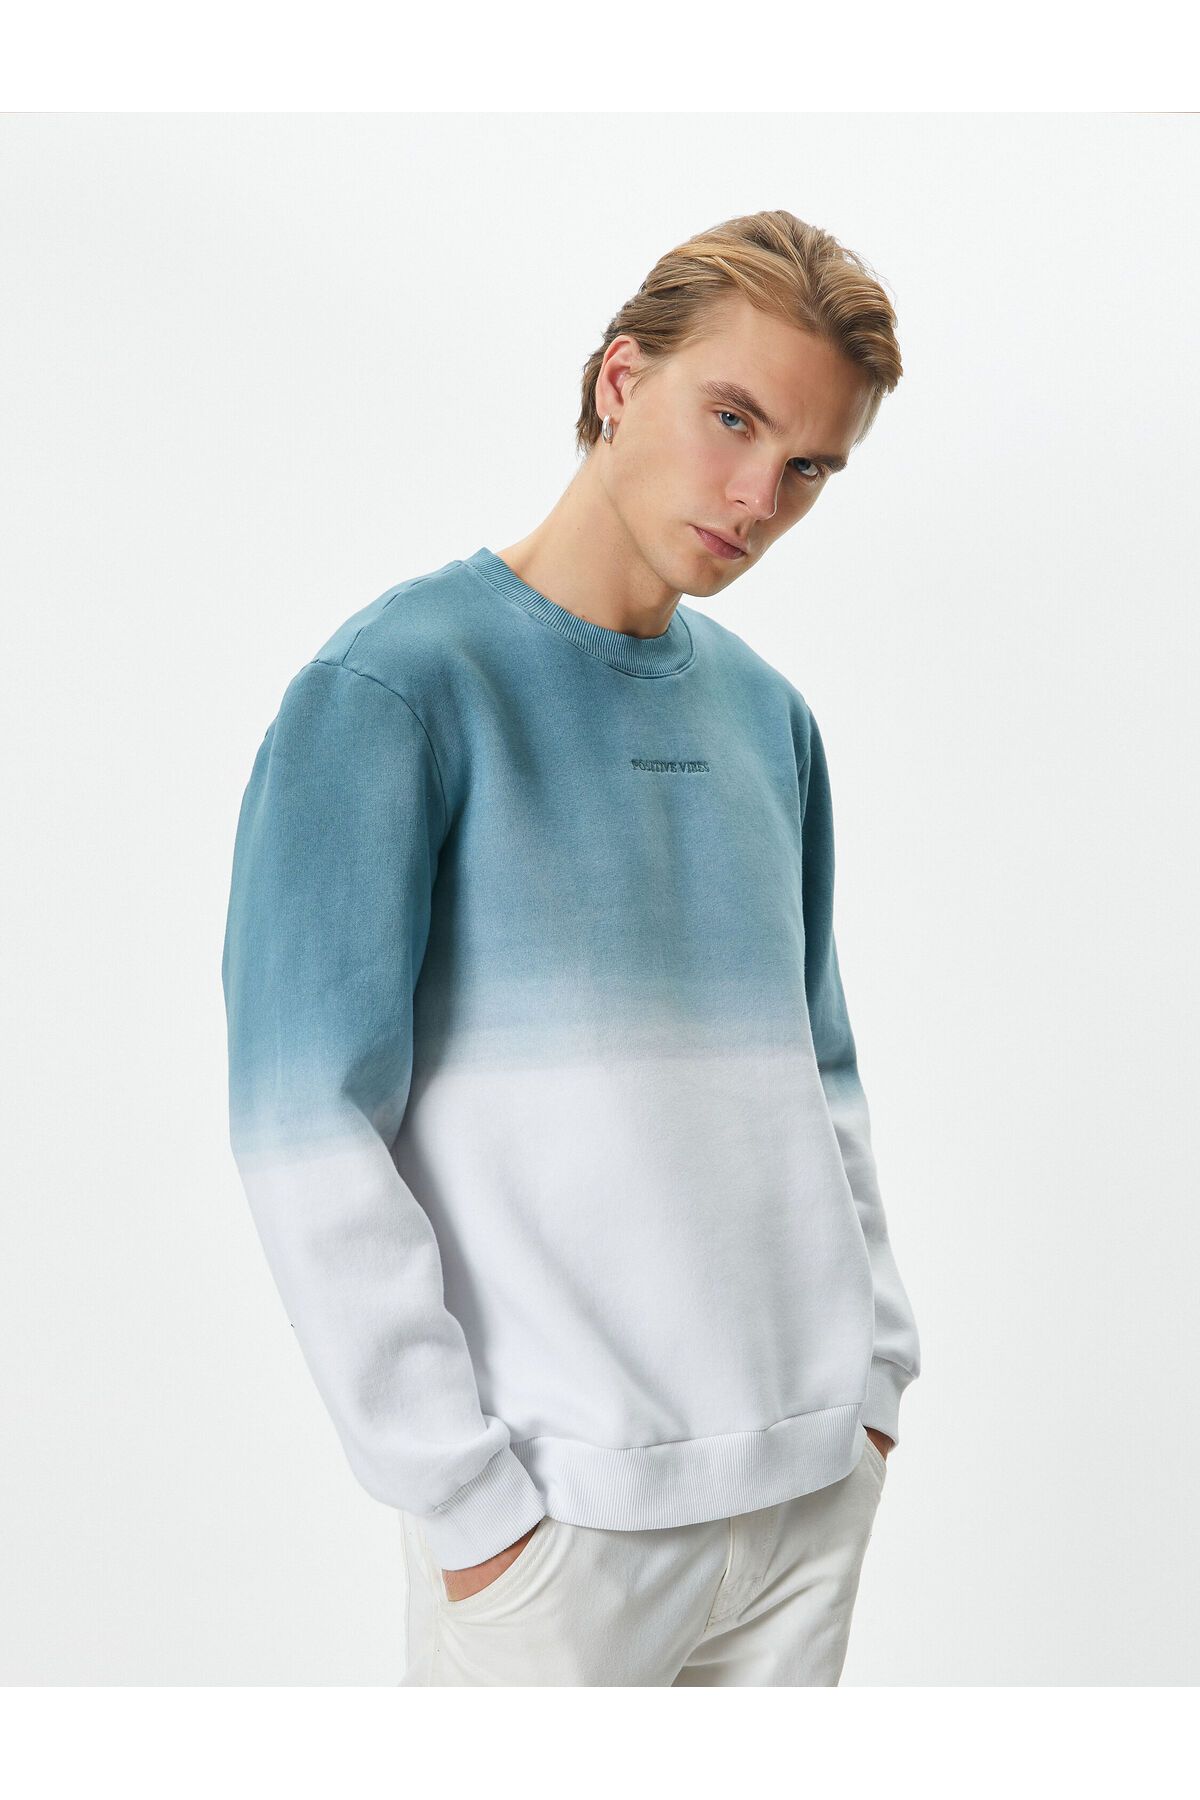 Sweatshirt گلدوزی شده چکیده یقه خدمه چاپ شده